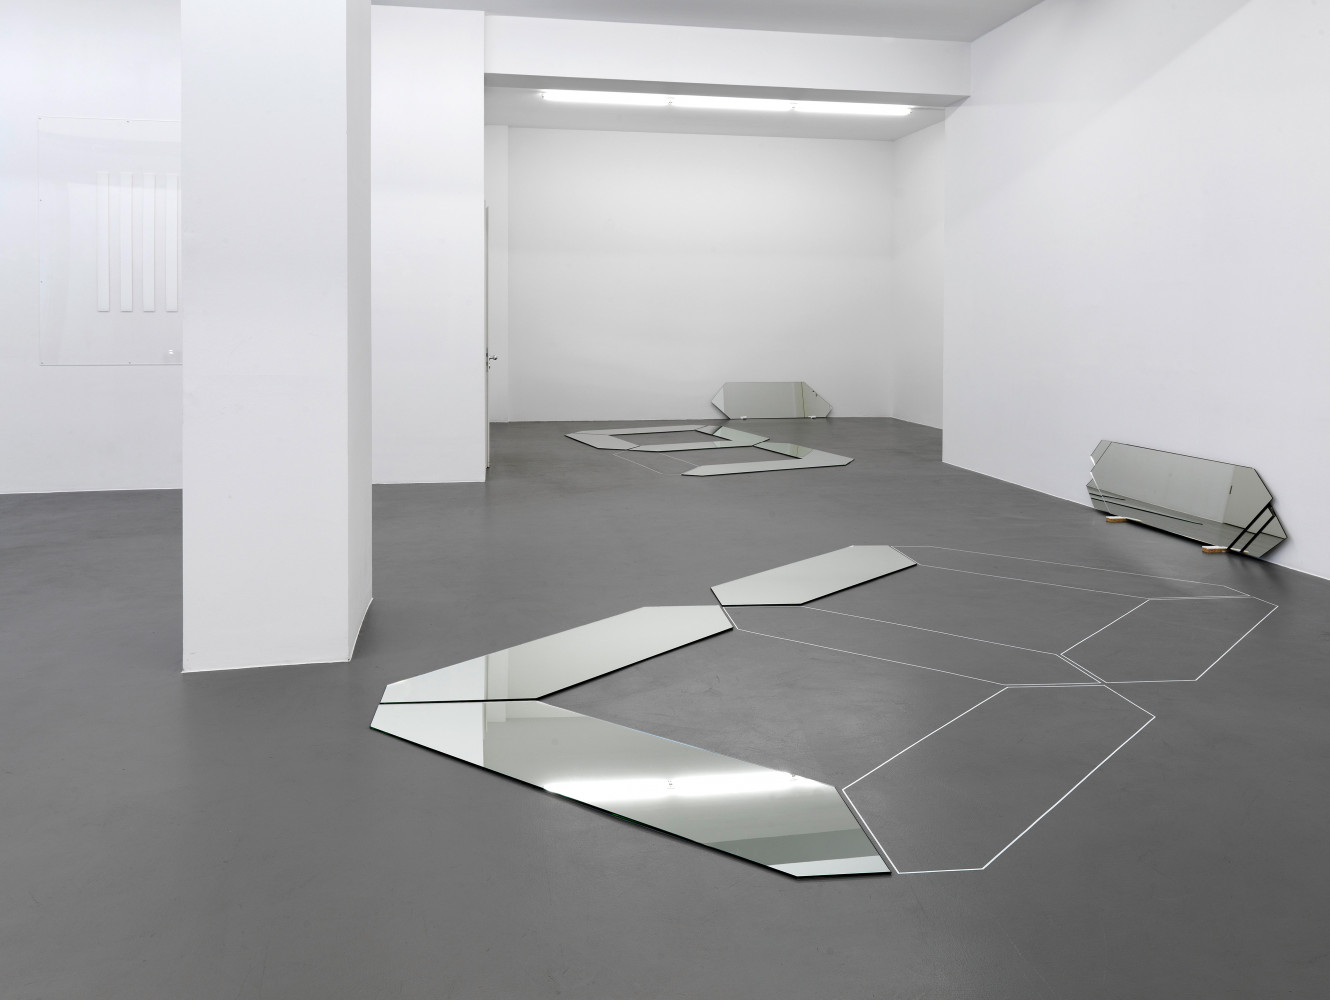 ‘Daniel Buren, Tony Cragg, Tatsuo Miyajima’, Installation view, Buchmann Galerie, 2012